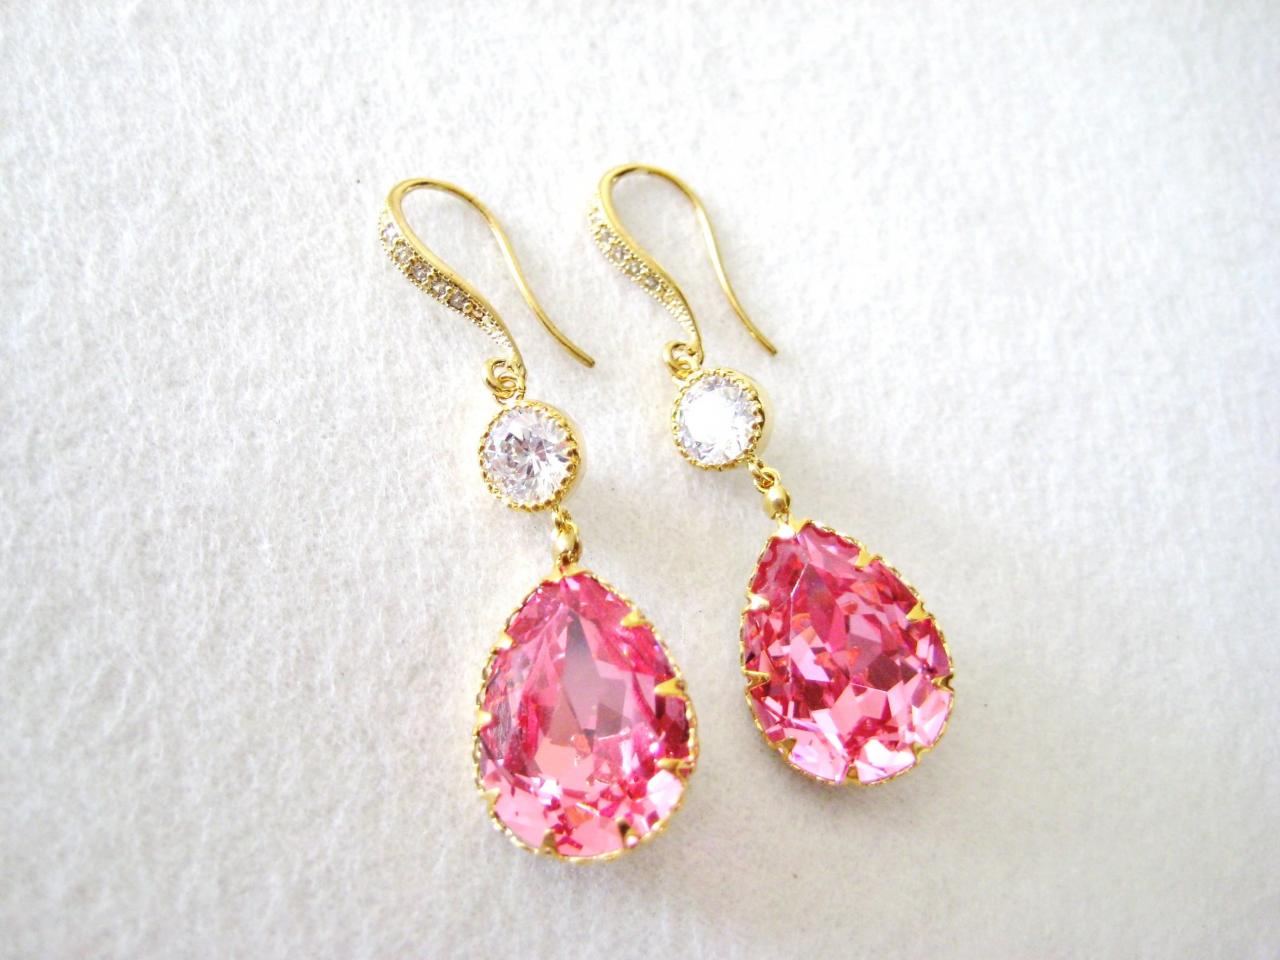 Ruby Pink Earrings Swarovski Crystal Teardrop Hot Pink Earrings Long Dangle Crystal Wedding Earring Bridesmaid Gift Valentine's Day (E314)